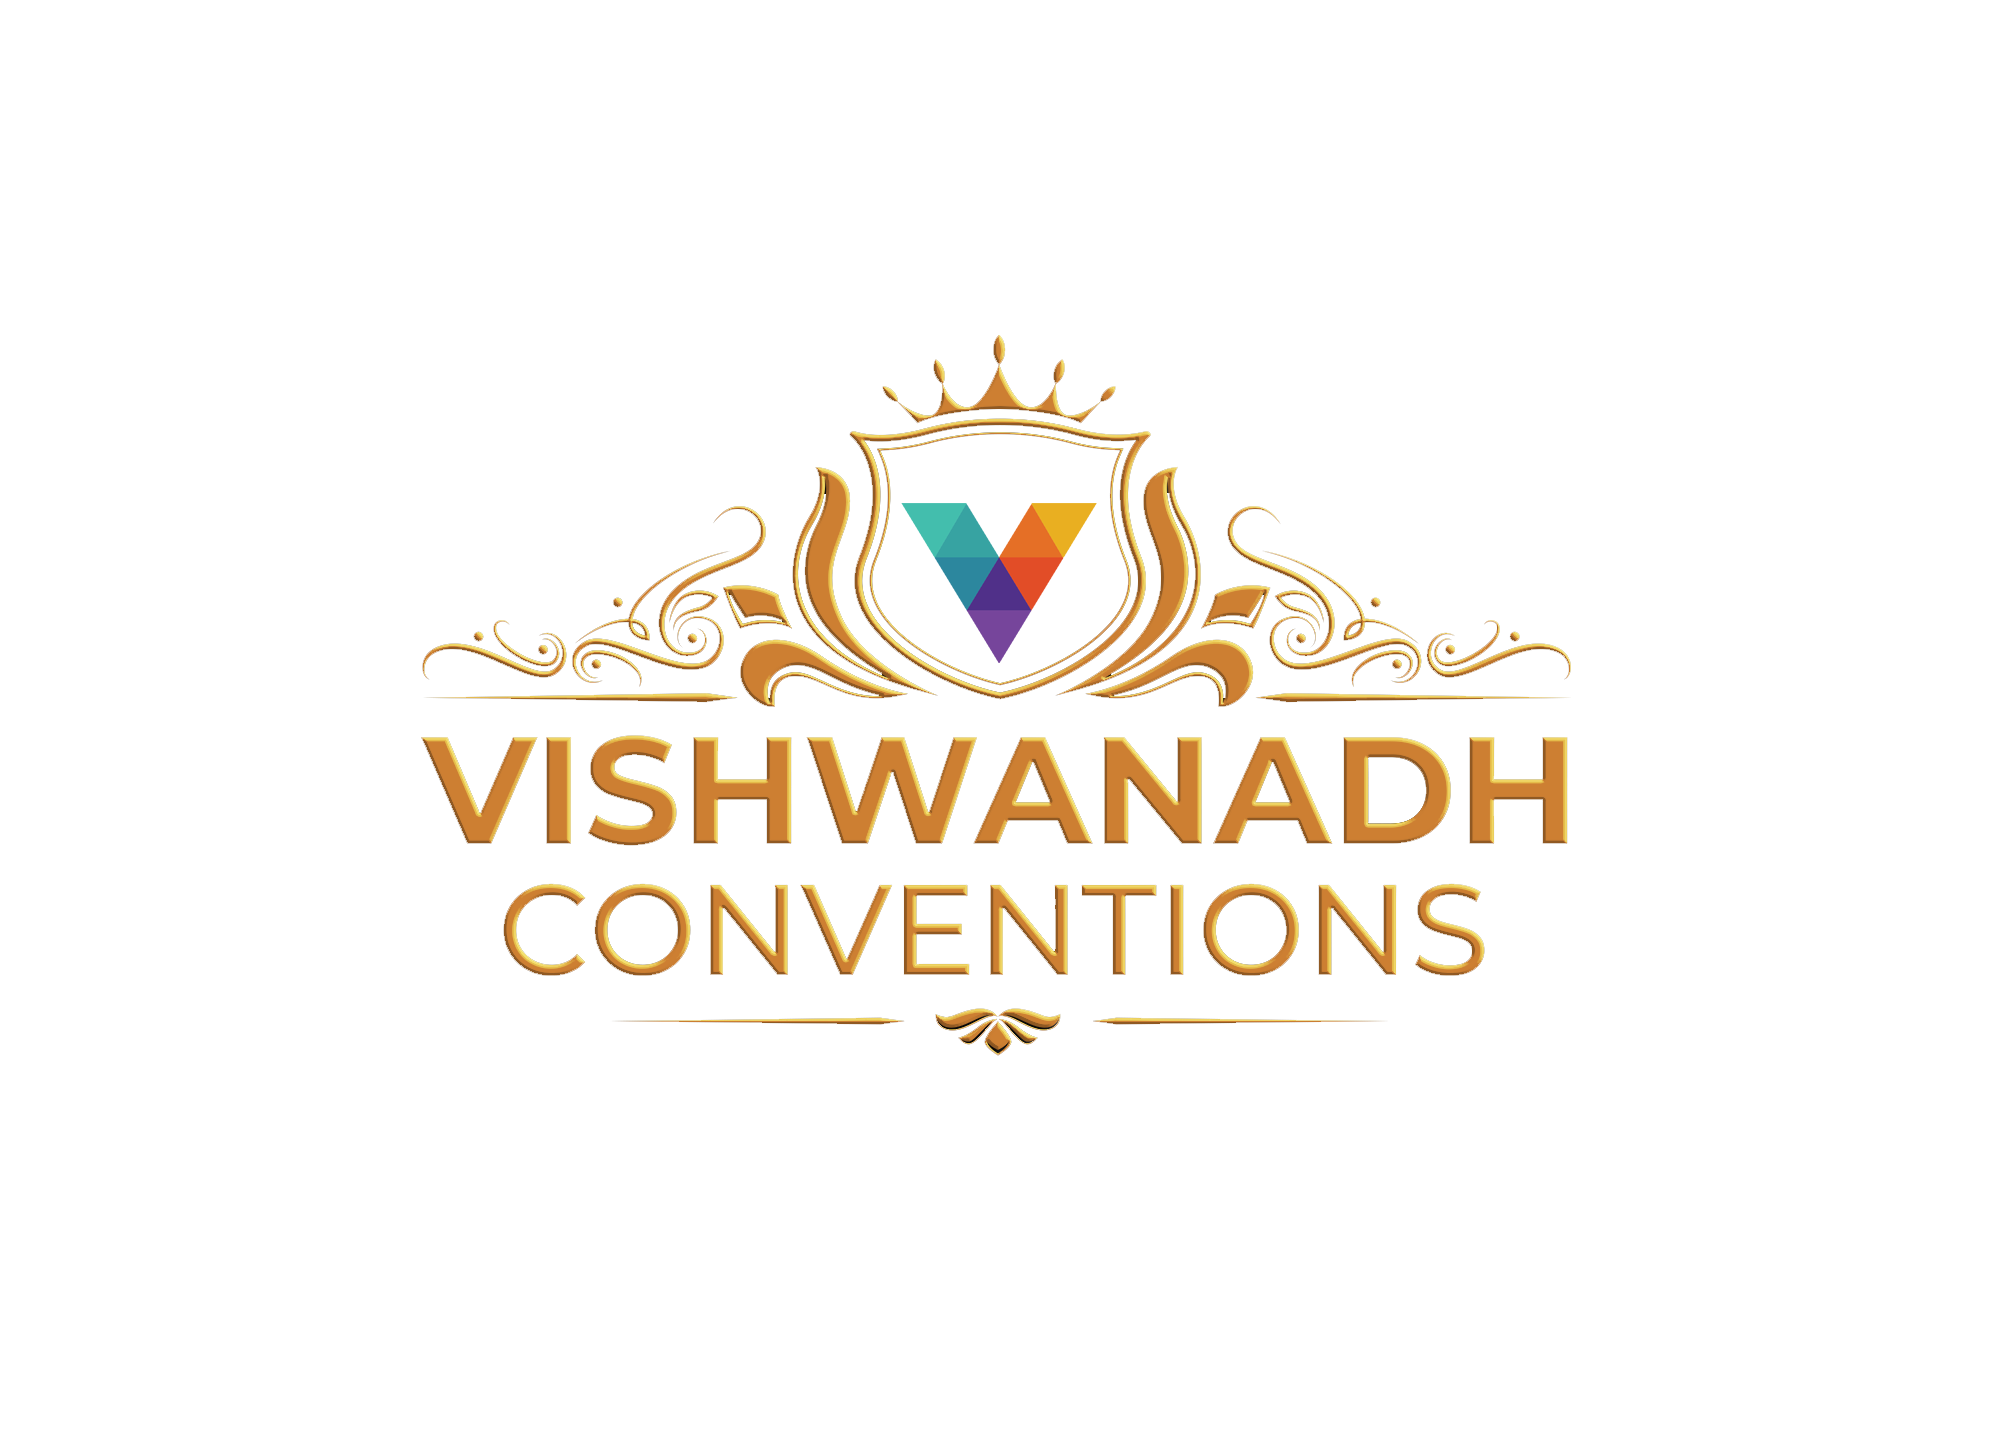 Vishwanadh conventions